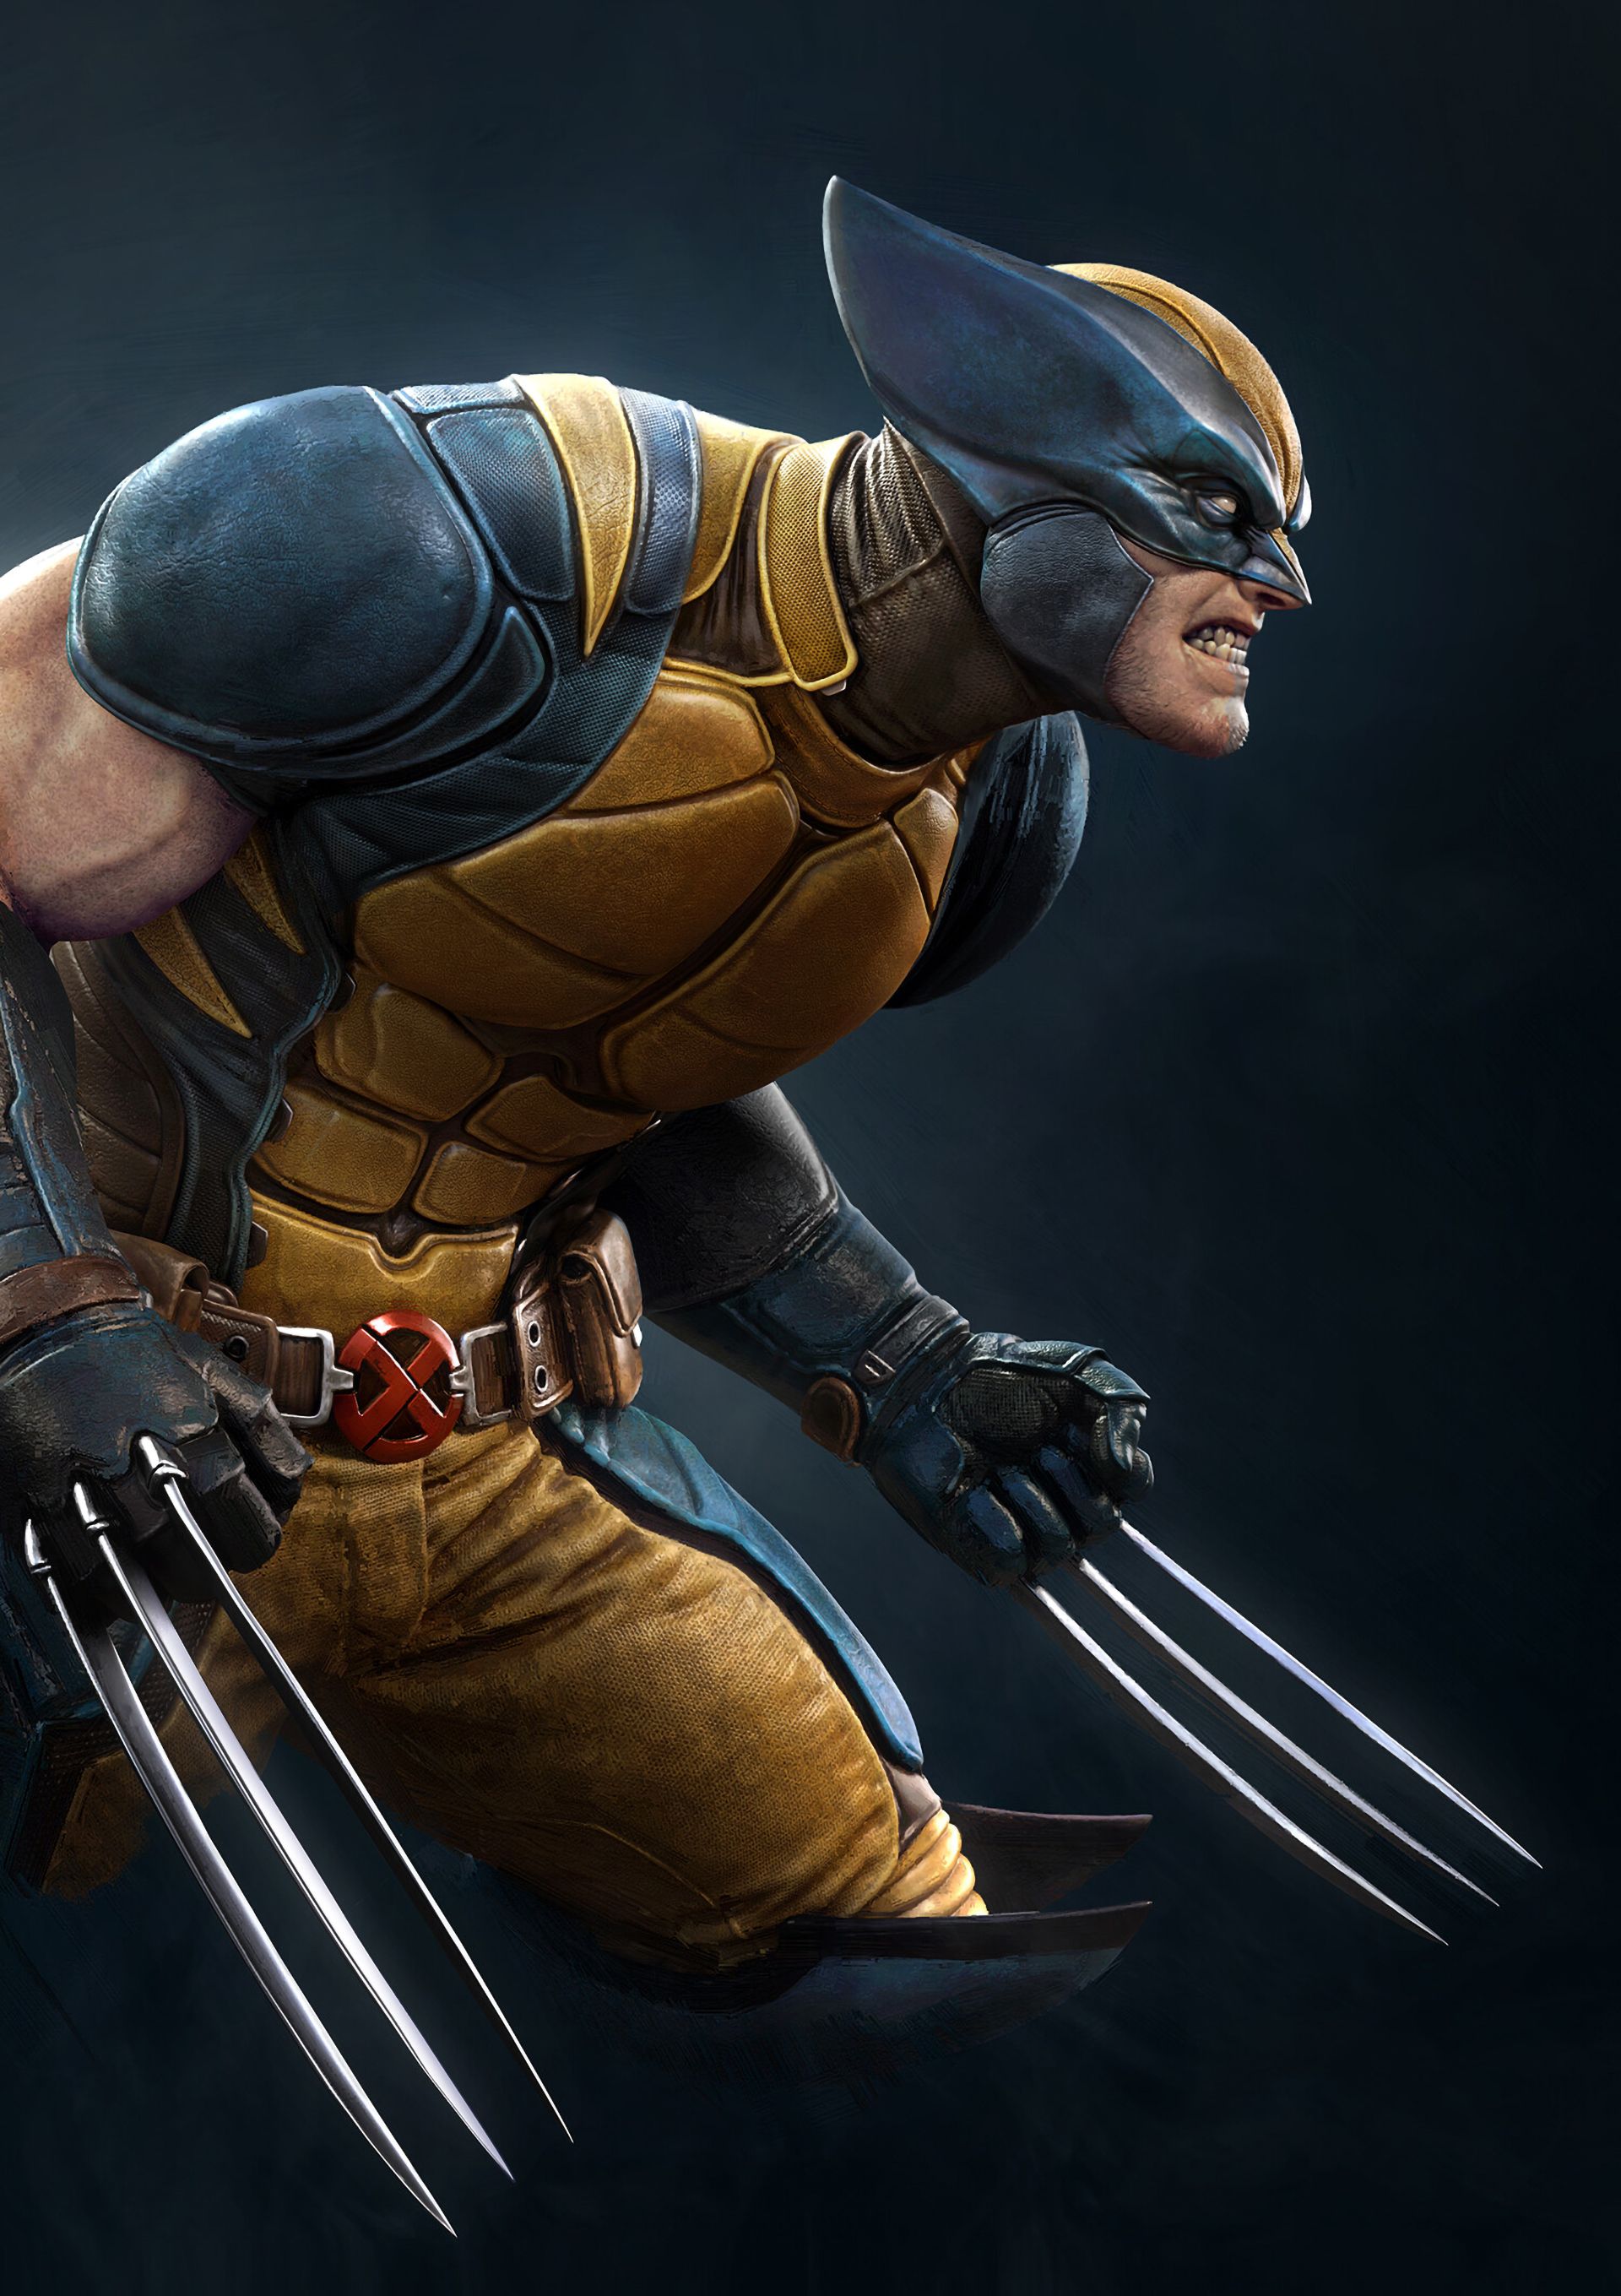 Wolverine X Men Art 1440P Resolution Wallpaper, HD Superheroes 4K Wallpaper, Image, Photo And Background